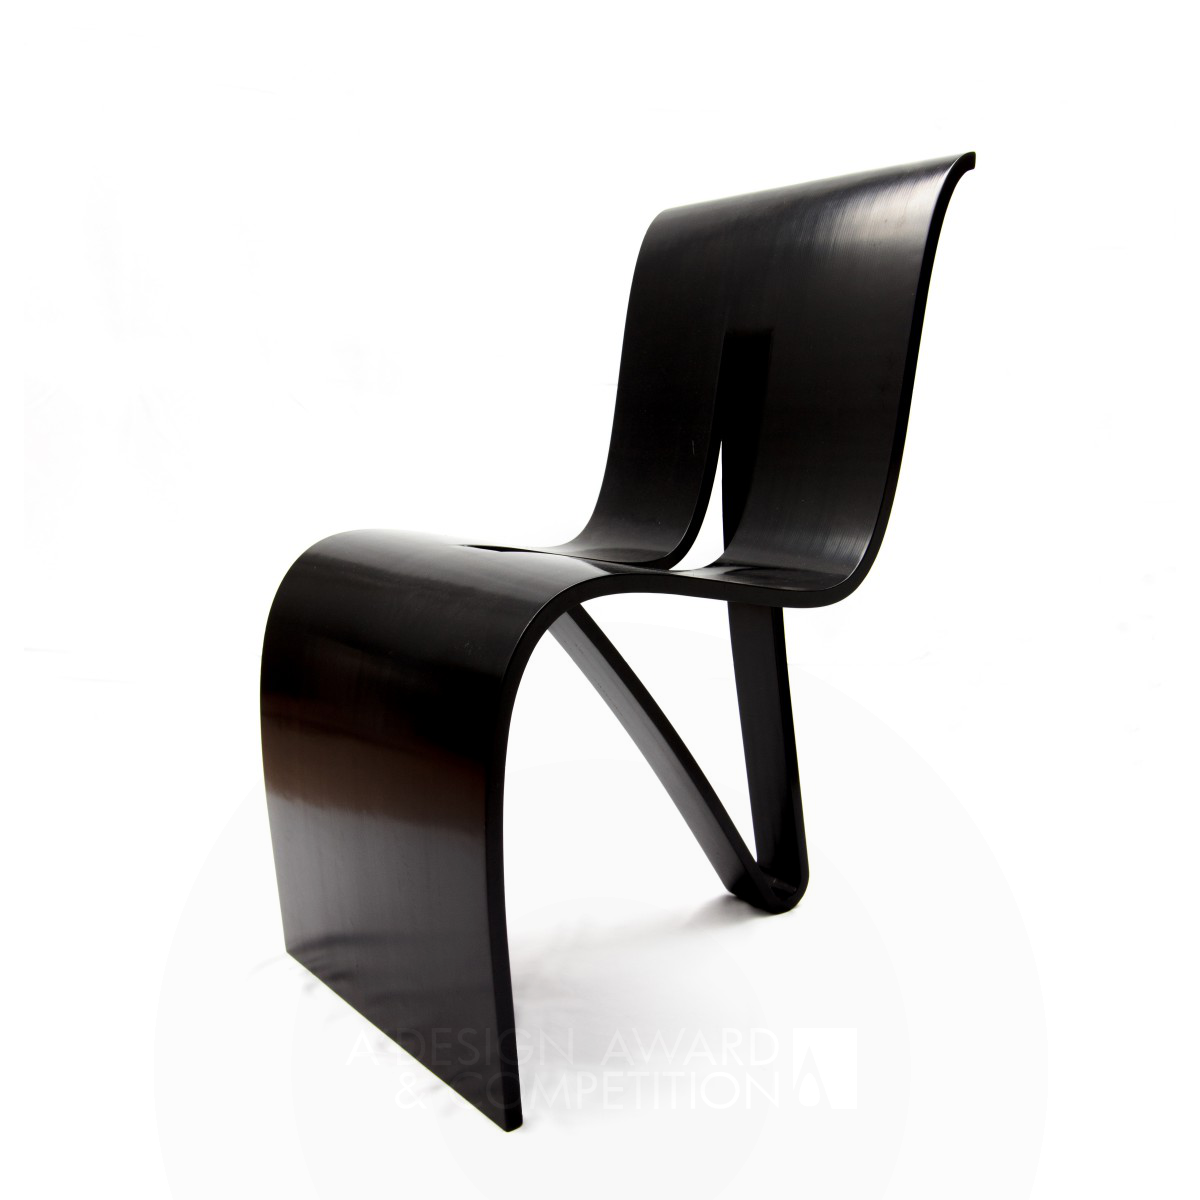 Kulms Stackable Chair by Daisuke Nagatomo and Minnie Jan Bronze Furniture Design Award Winner 2018 